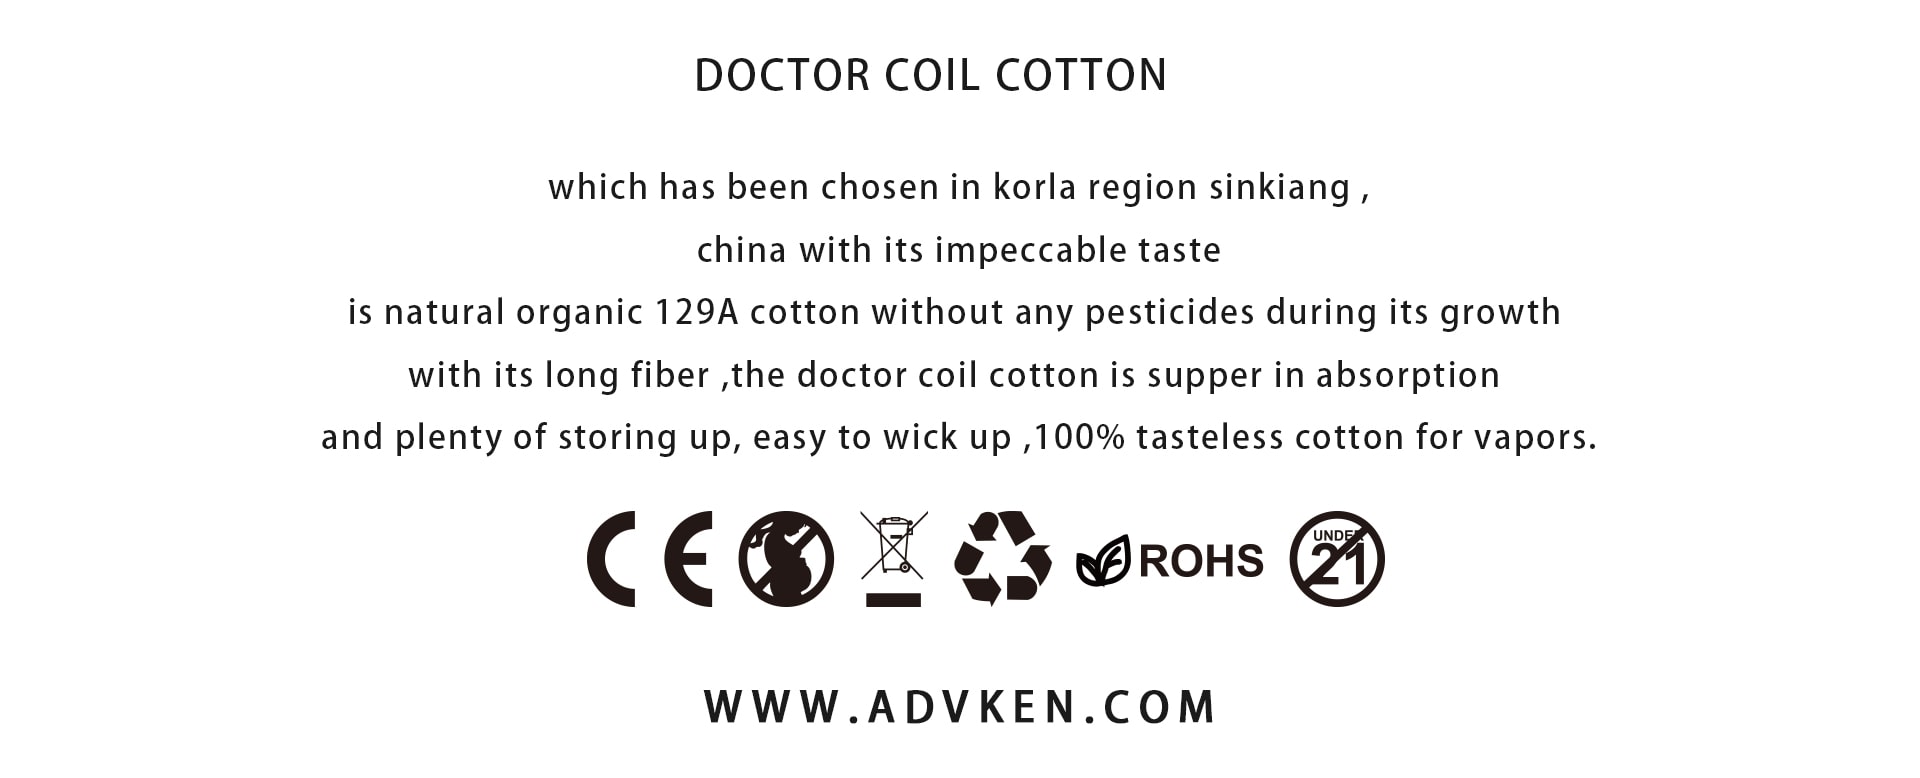 Advken Doctor Coil Cotton Feature